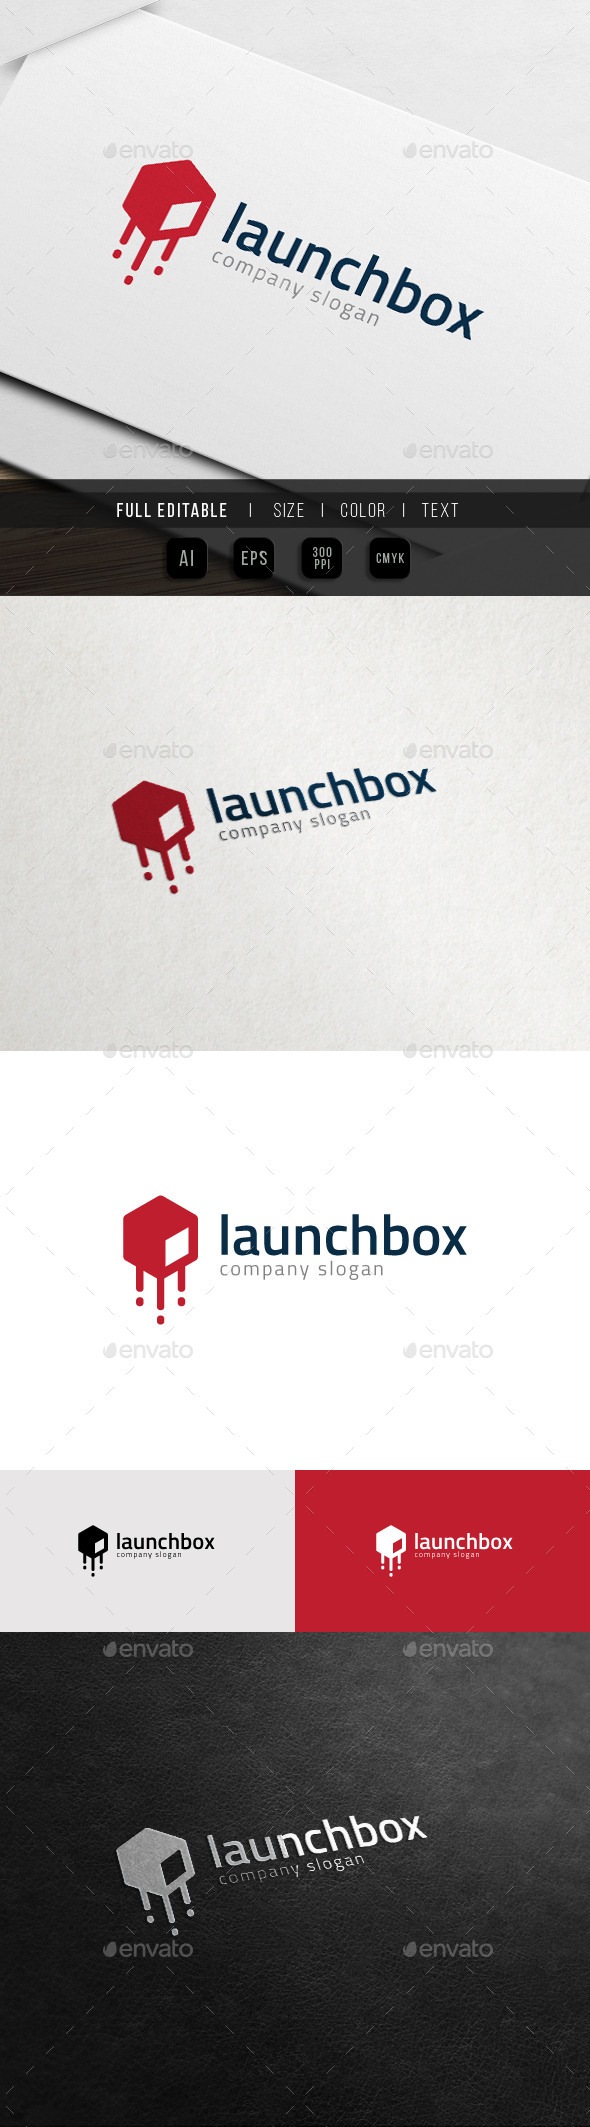 Launch Box App - Startup Growth Logo